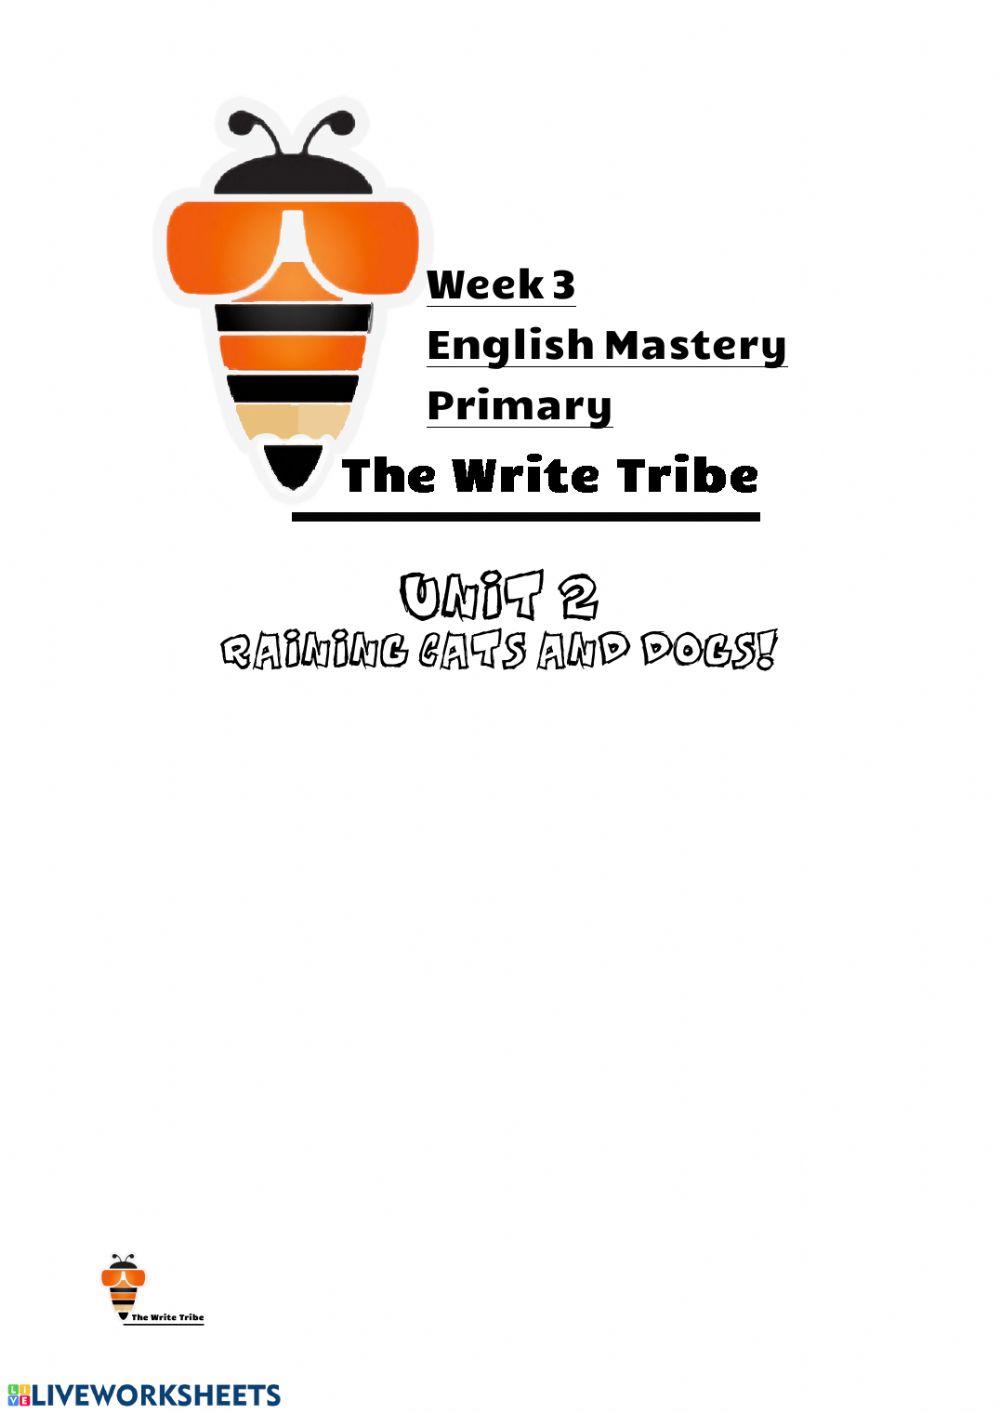 Week 3 - English Mastery